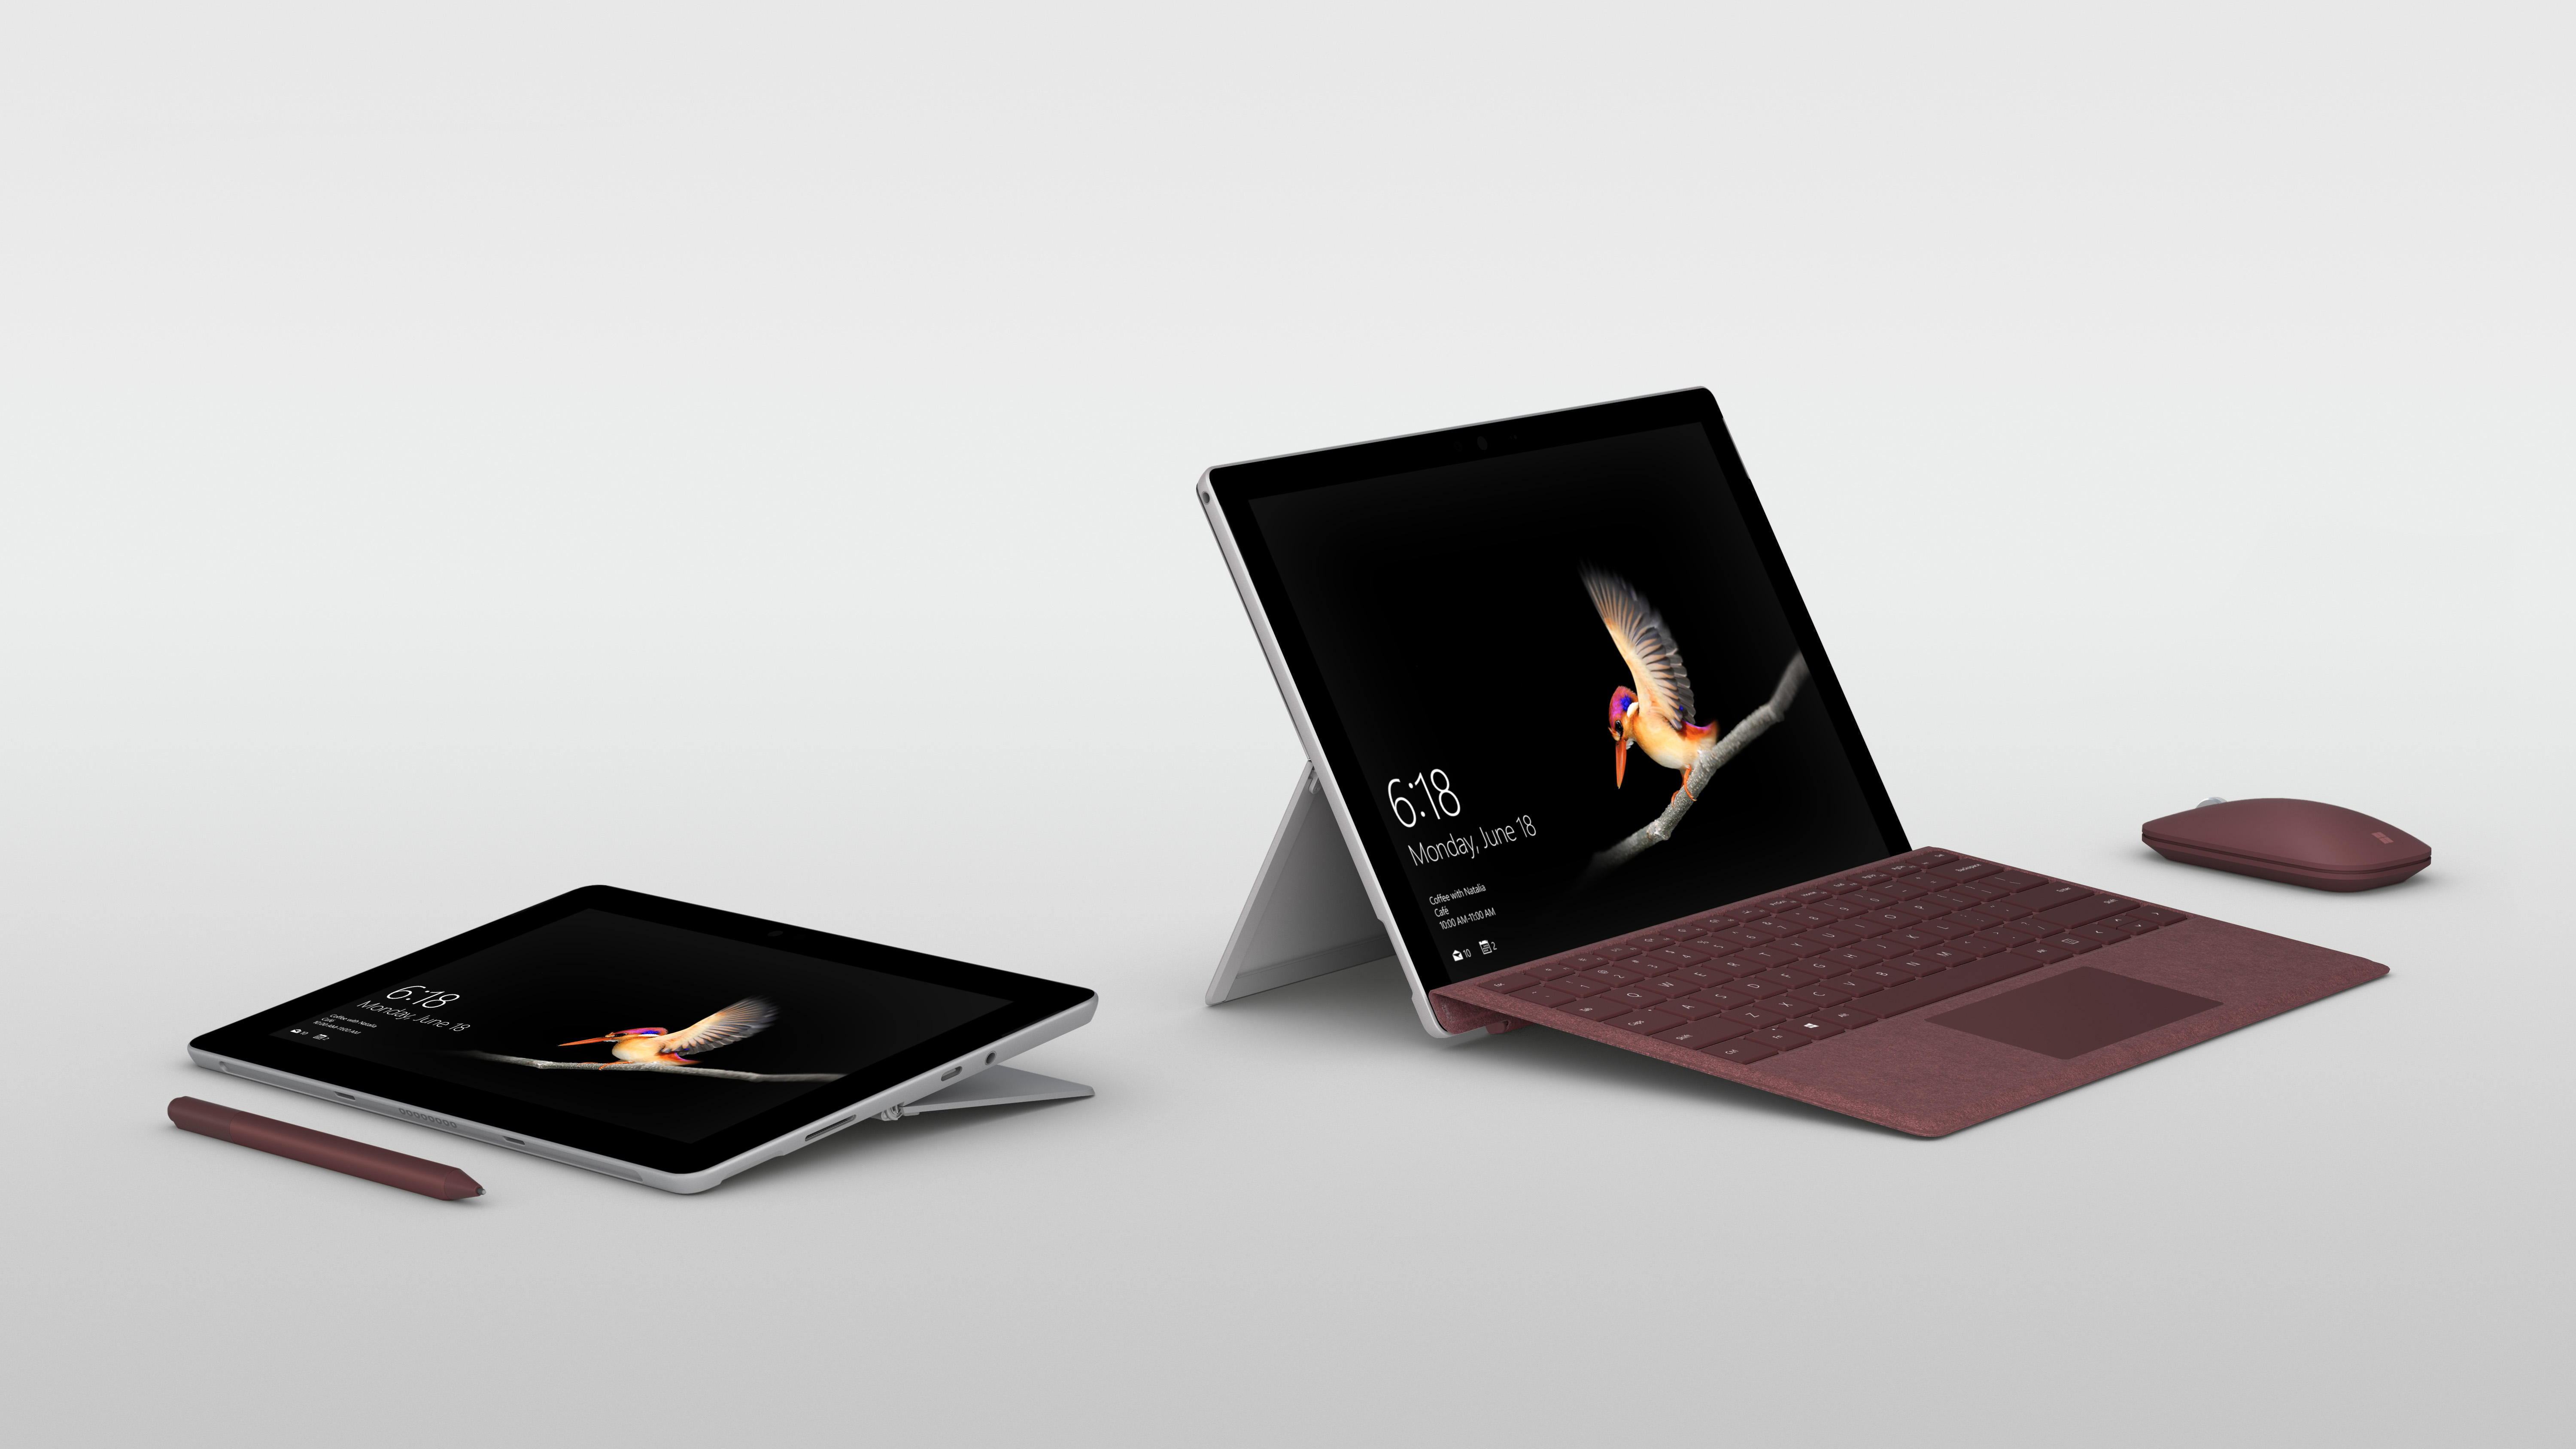 Microsoft kündigt Surface Go an: das portabelste und erschwinglichste Surface-Produkt.